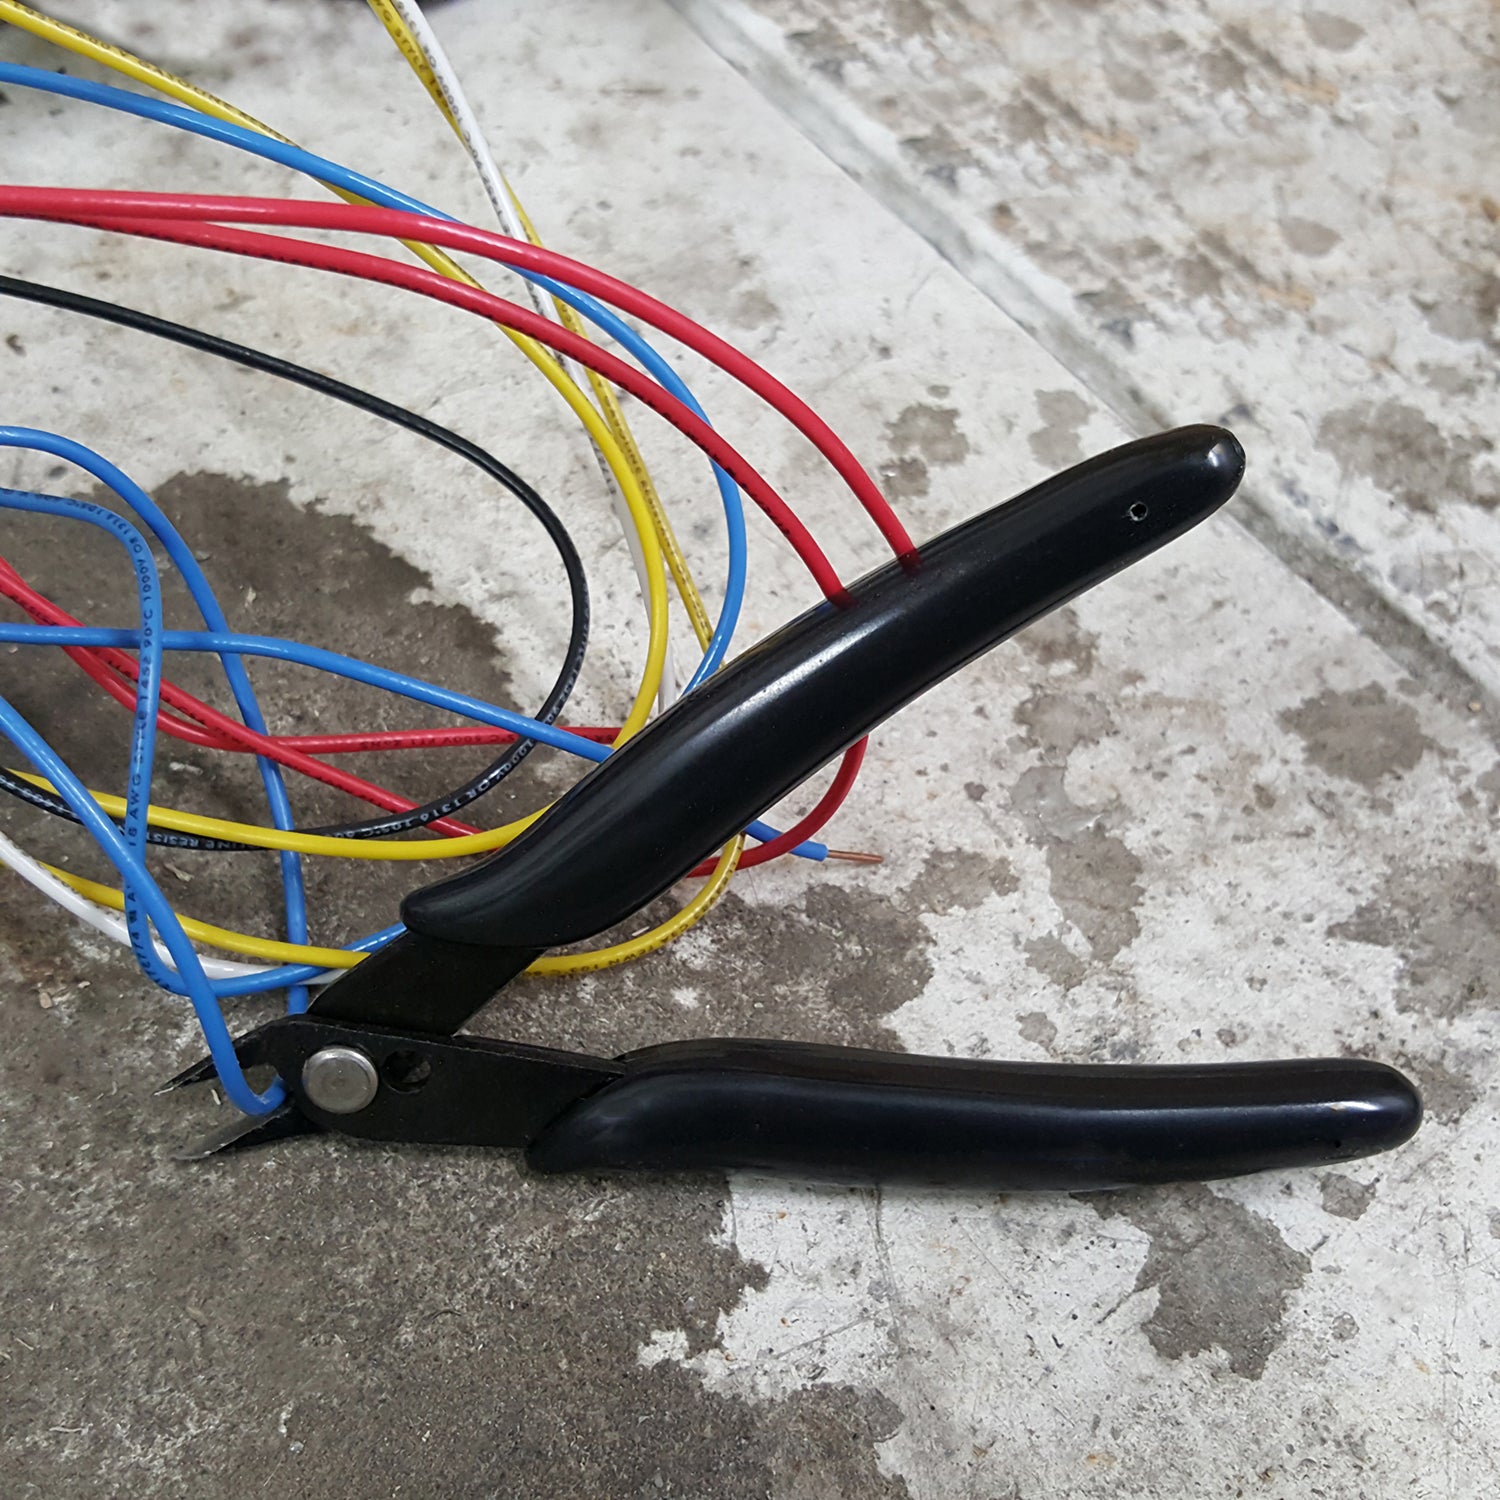 Wire Flush Cutter Tool - 18 Gauge Electrical Nippers Micro Cutter, 3pk